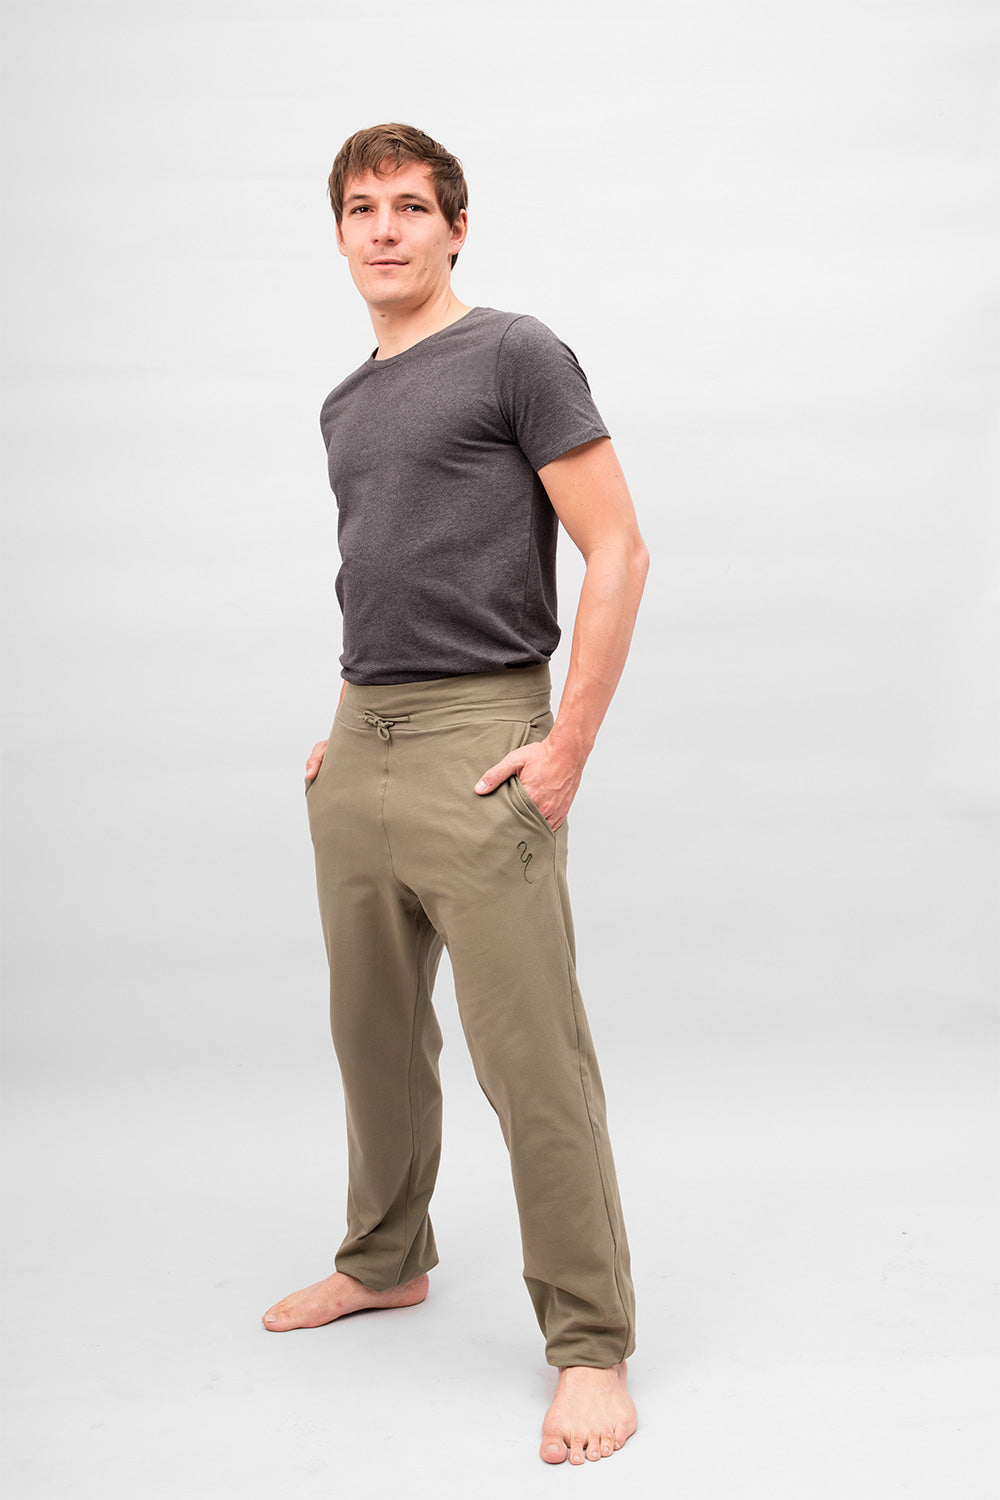 Mahan Men's Yoga Pants - Khaki